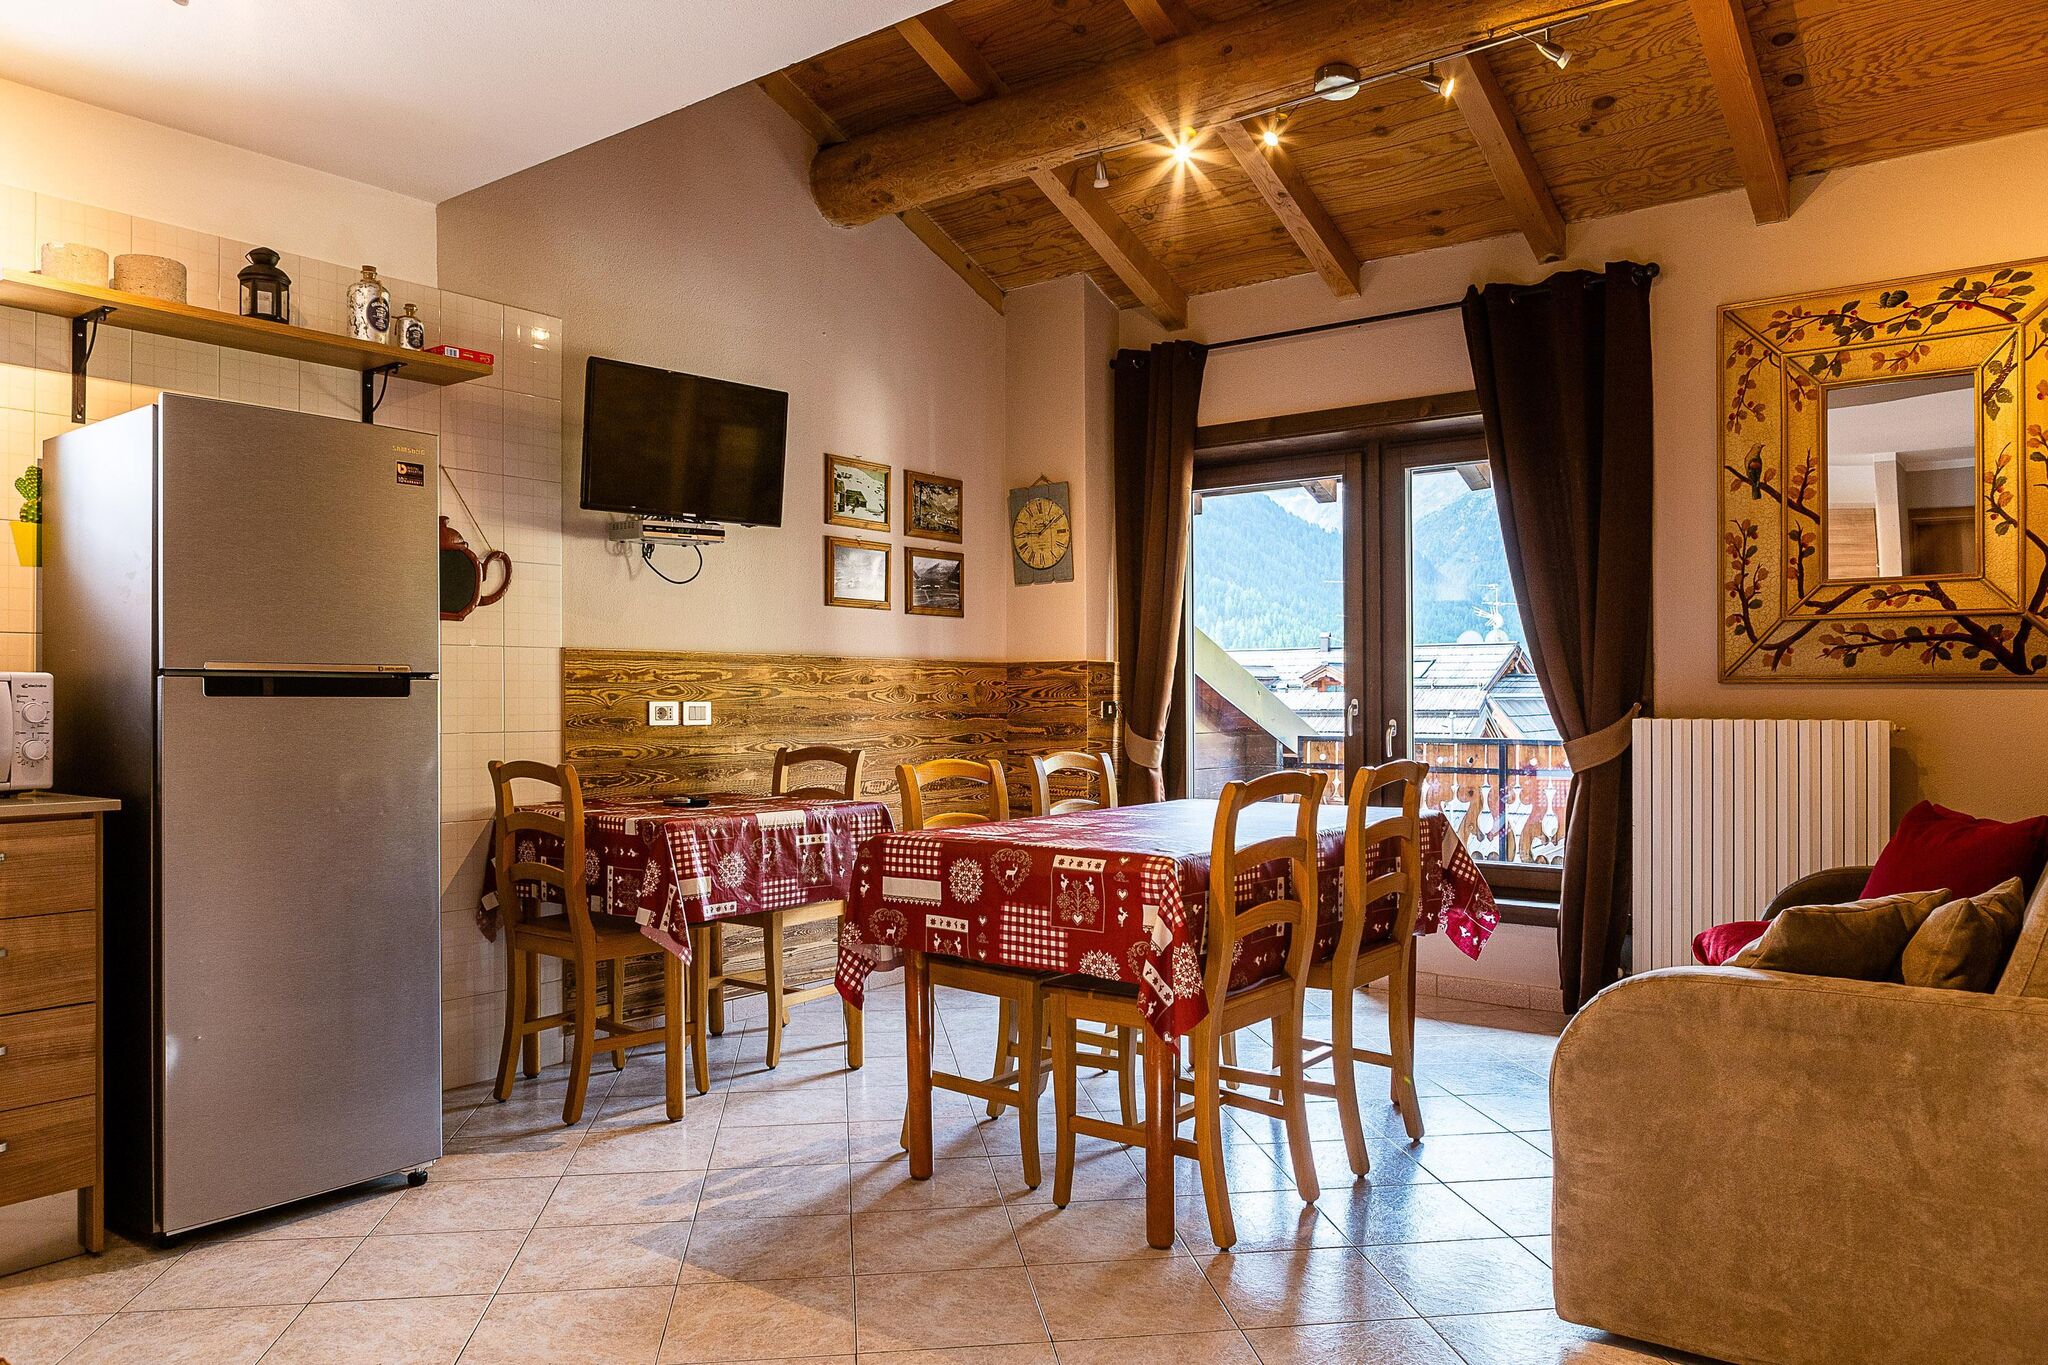 Peaceful Holiday Home in Livigno Italy near Ski Area